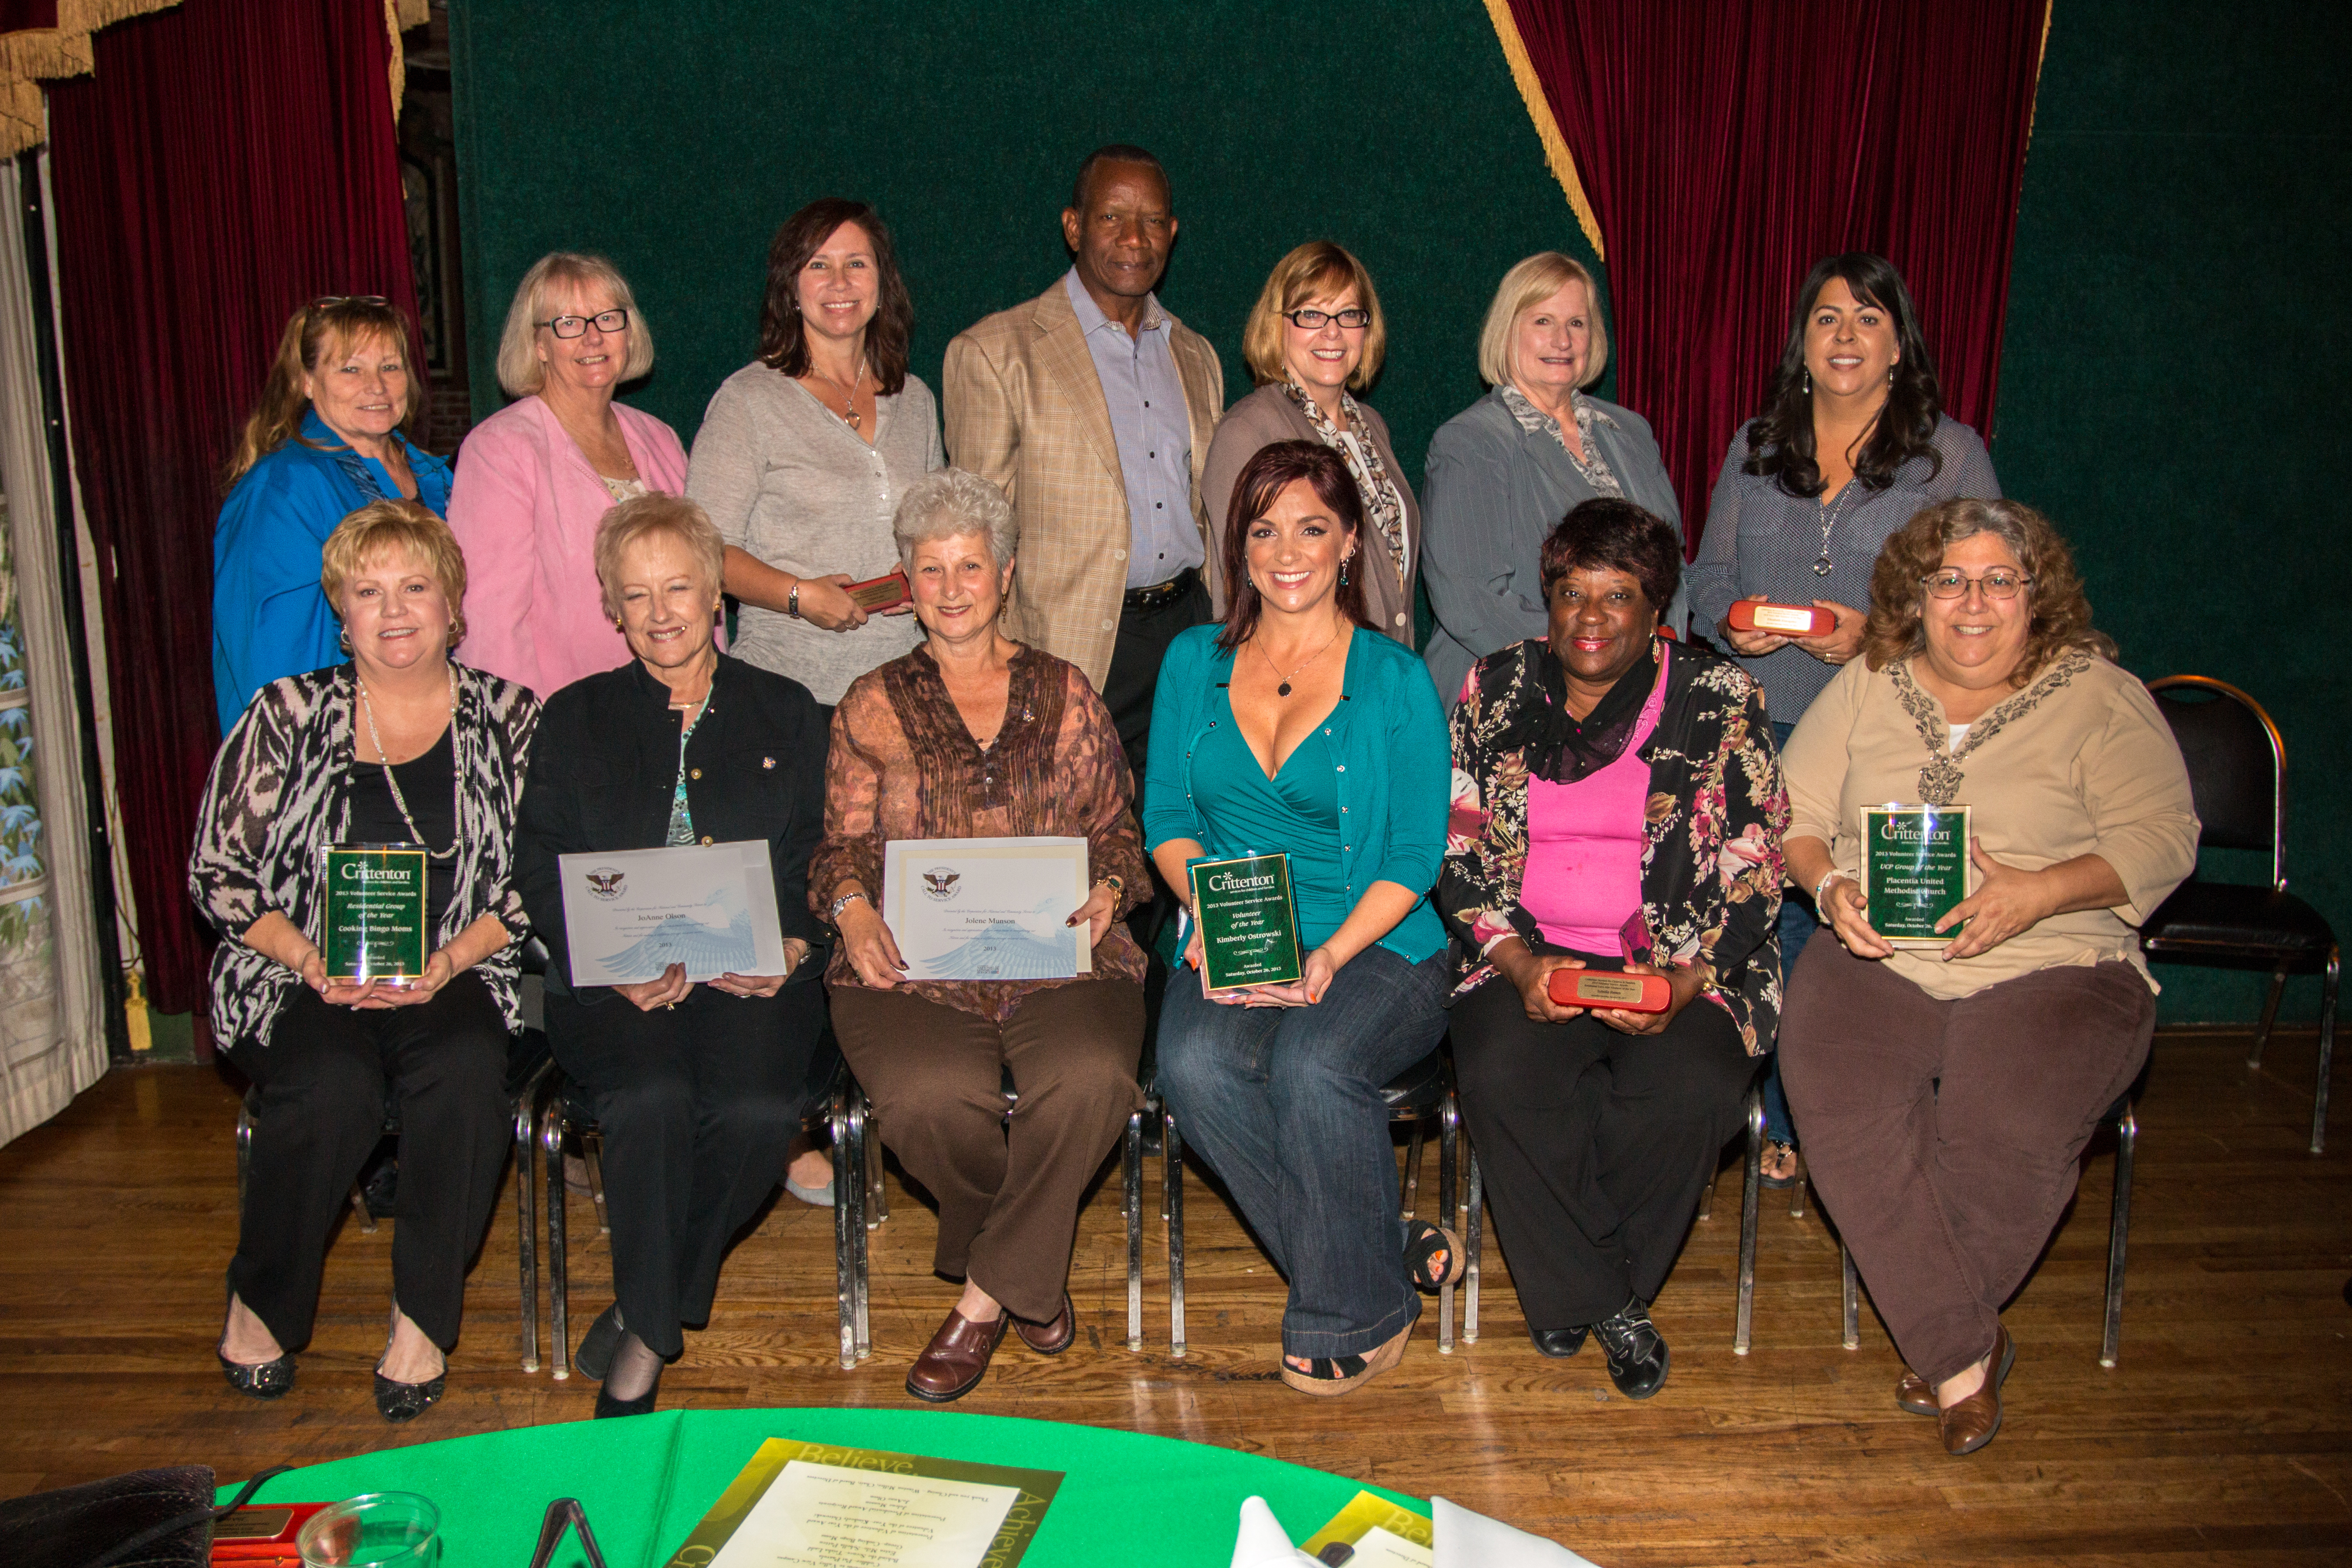 2013 Crittenton Volunteer Award Winners for Public Service.